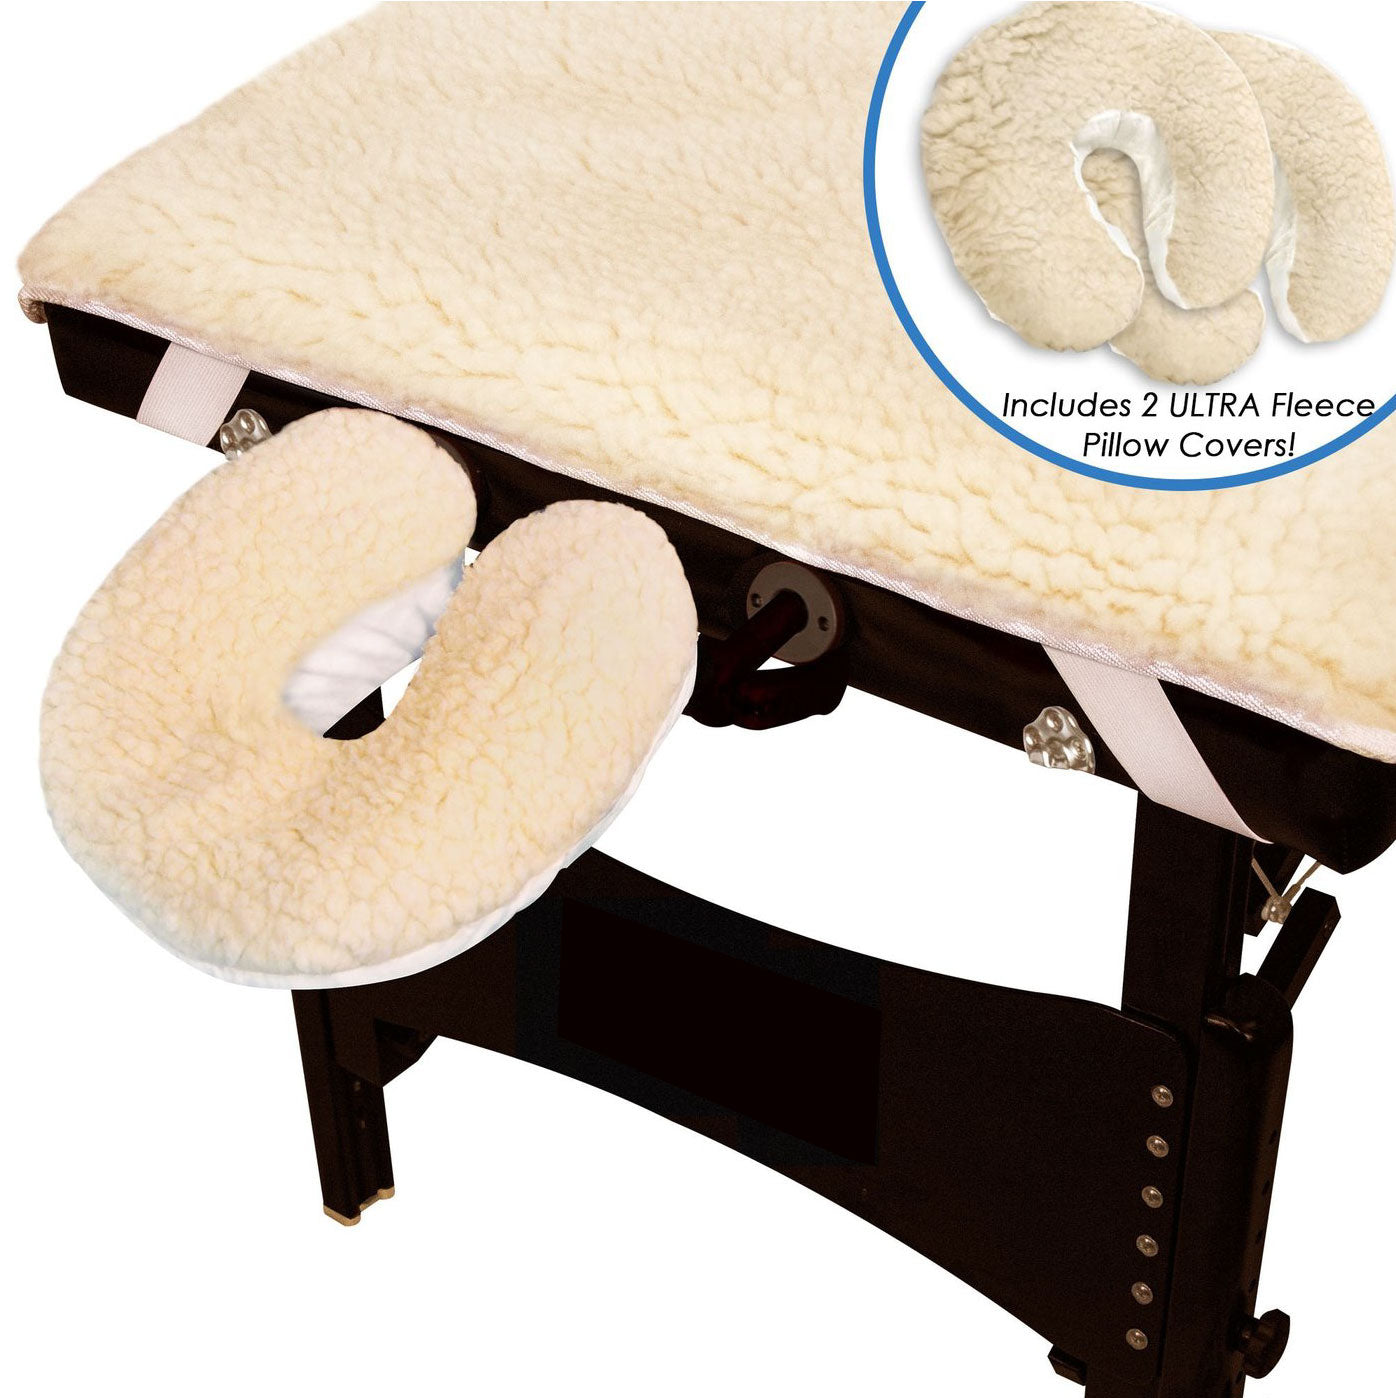 Ultra™ Fleece Massage Table Pad Set - Now 2X Thicker